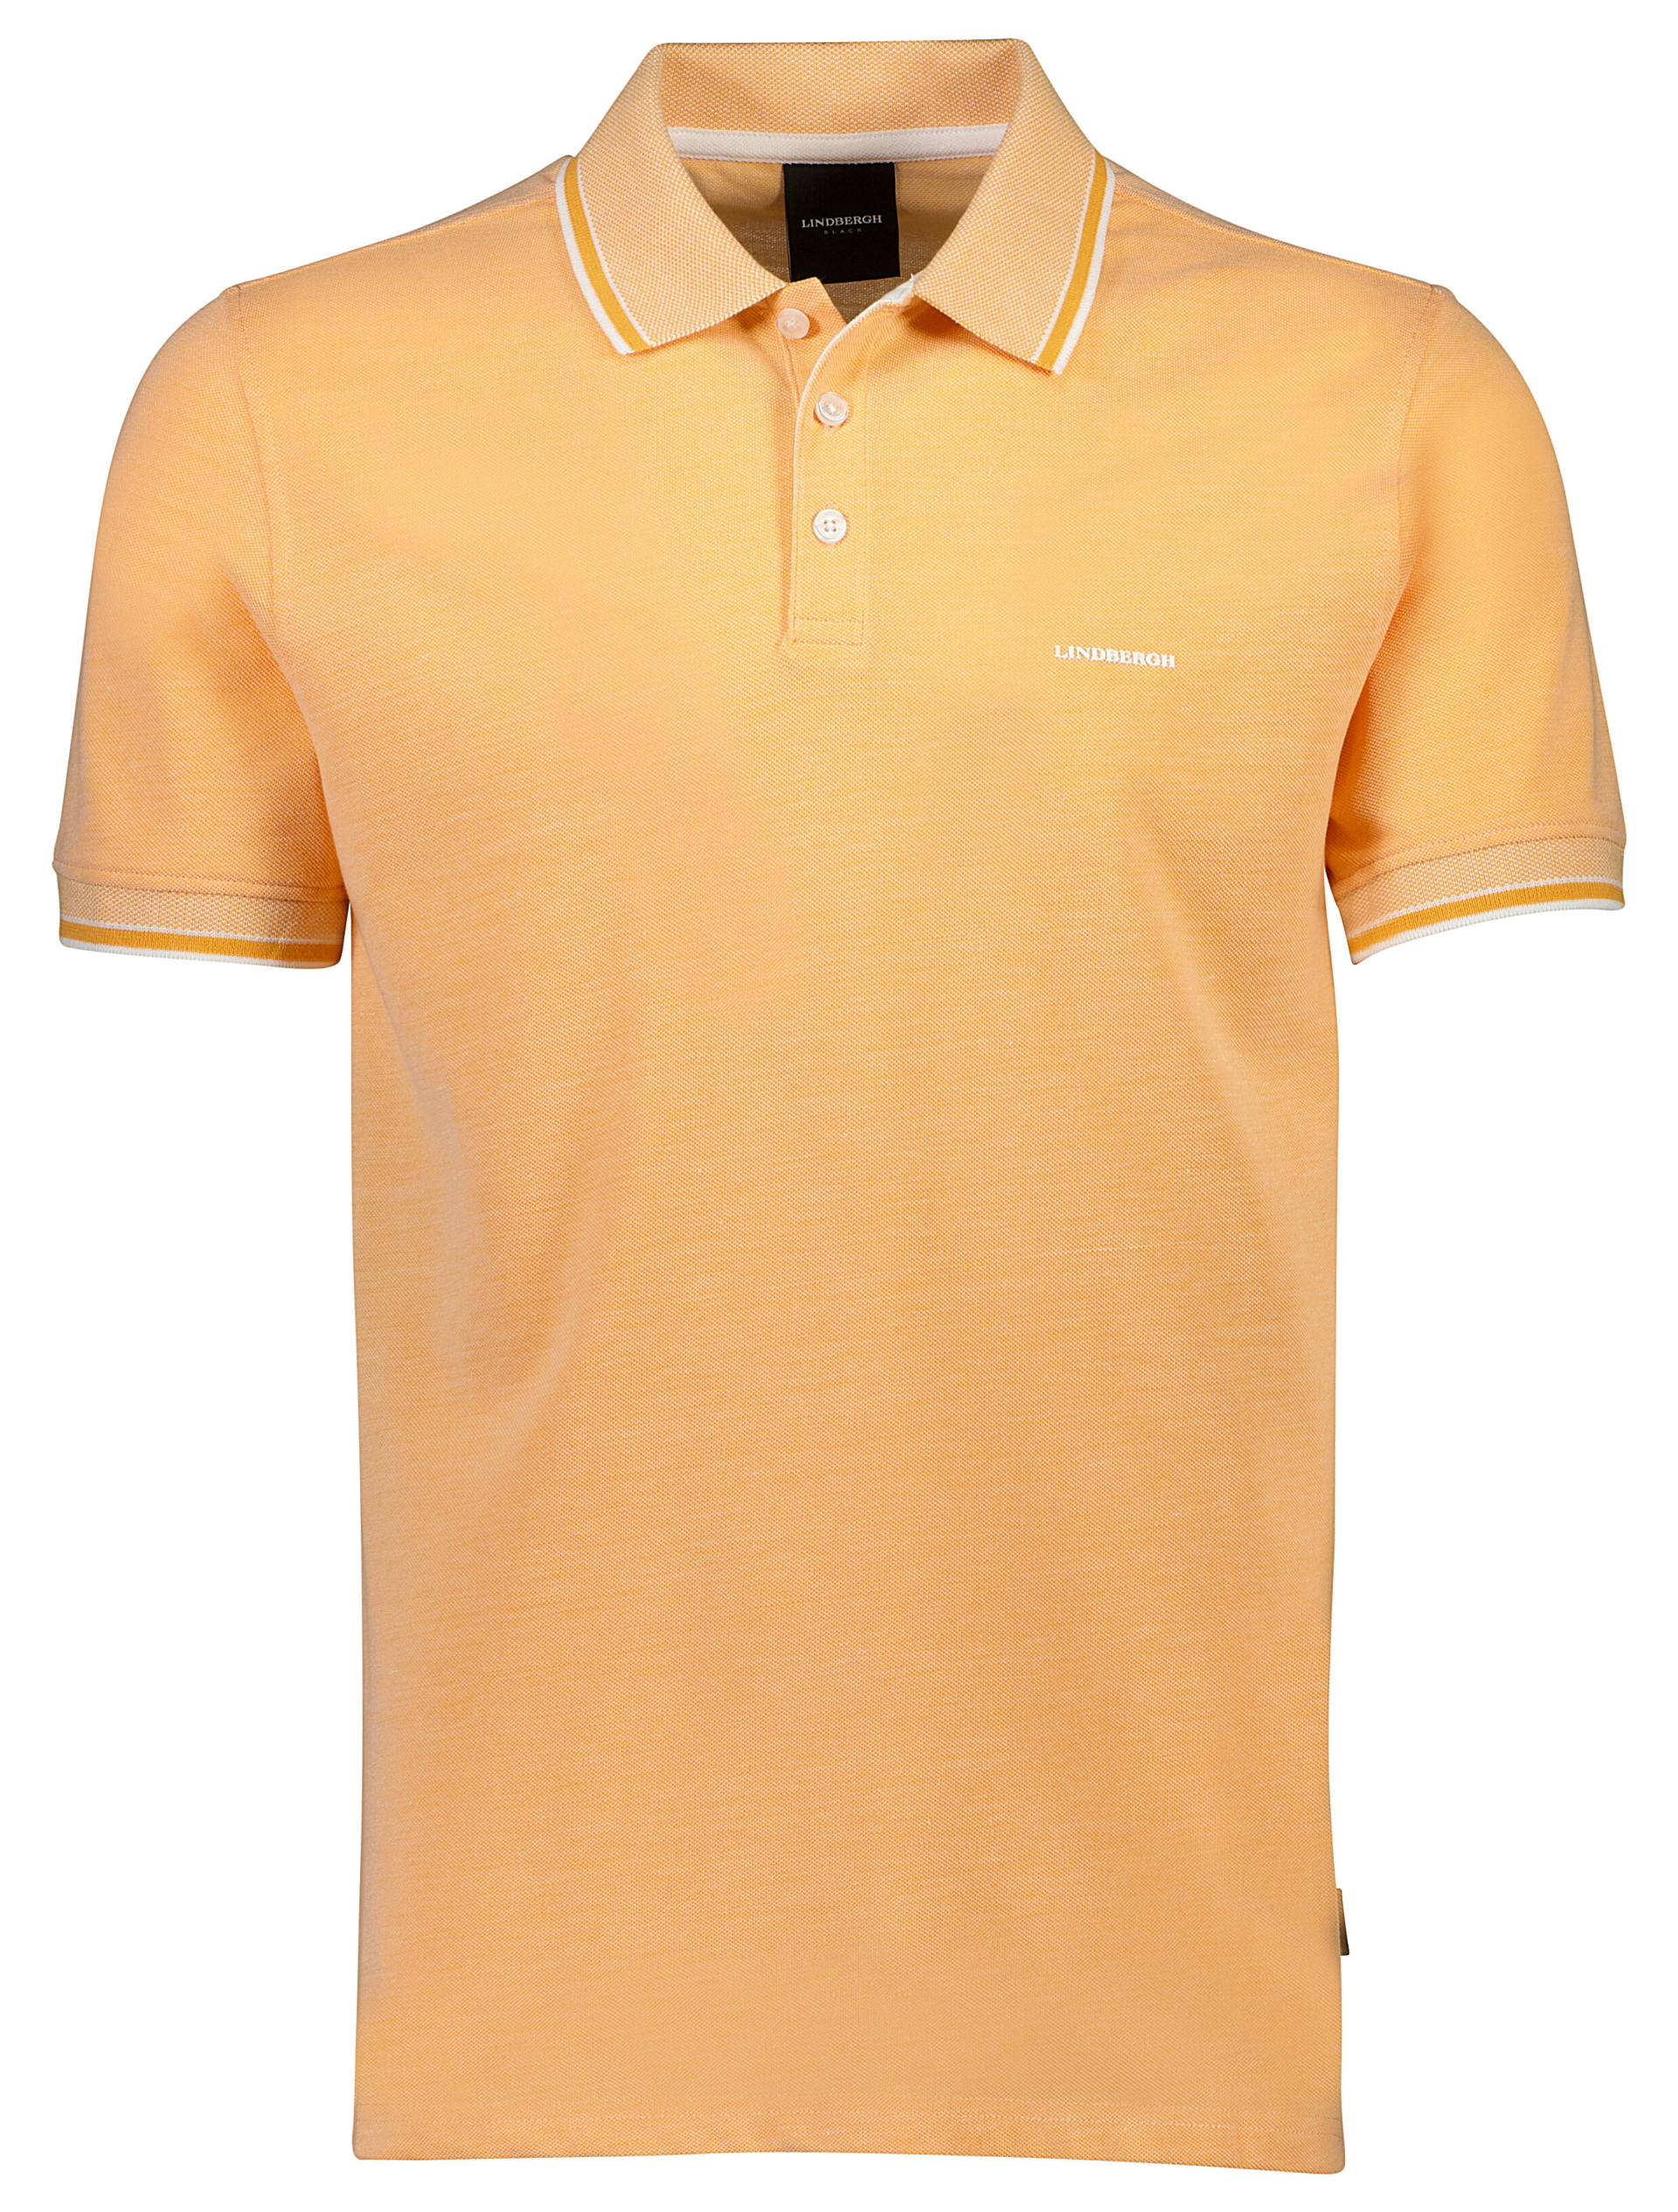 Lindbergh Polo shirt orange / lt apricot